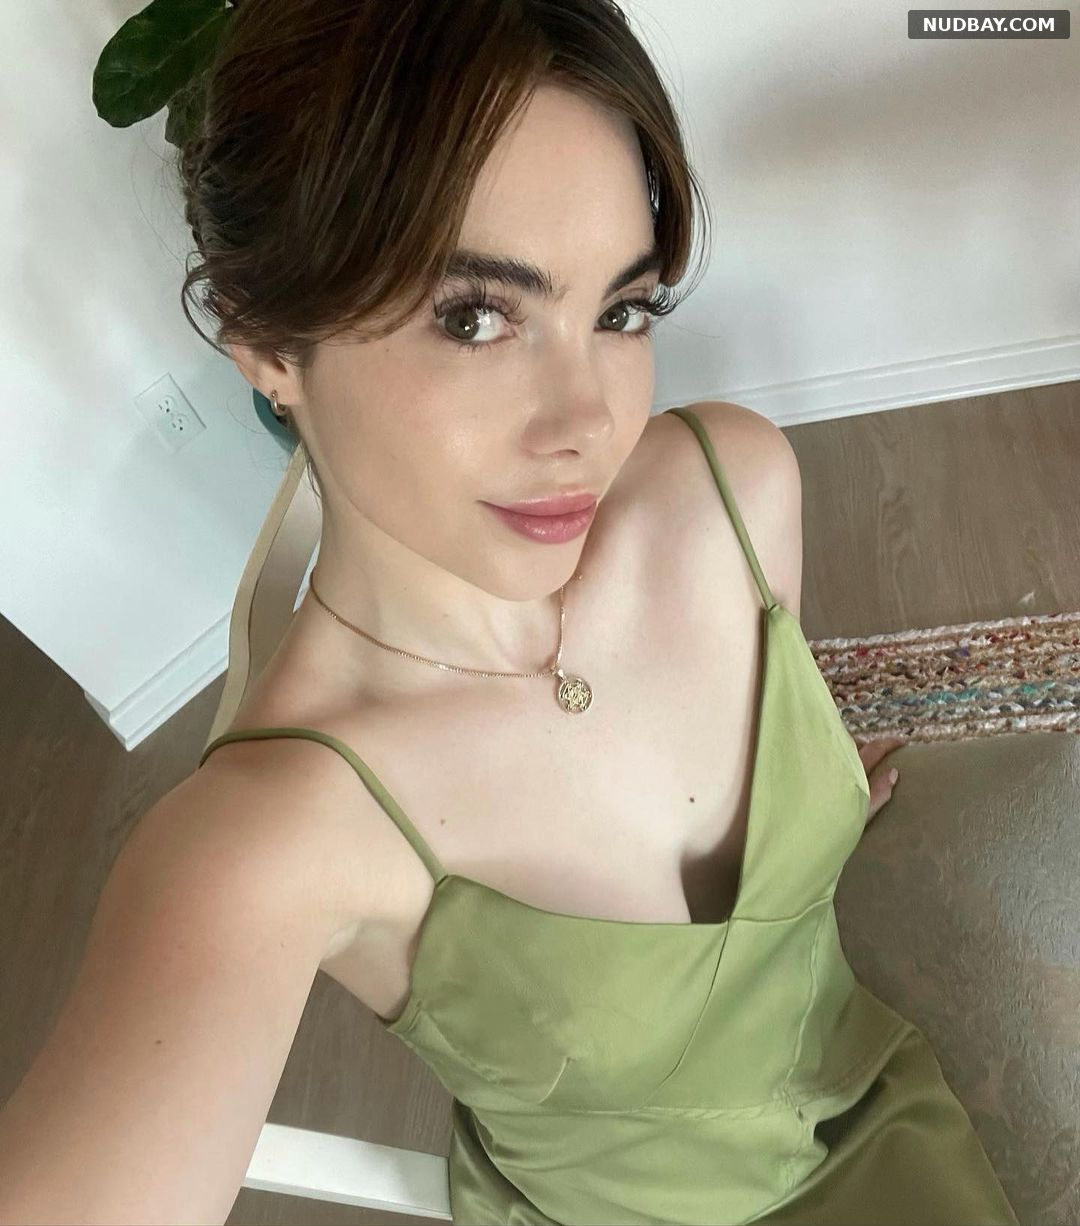 McKayla Maroney boobs in green dress Aug 07 2021